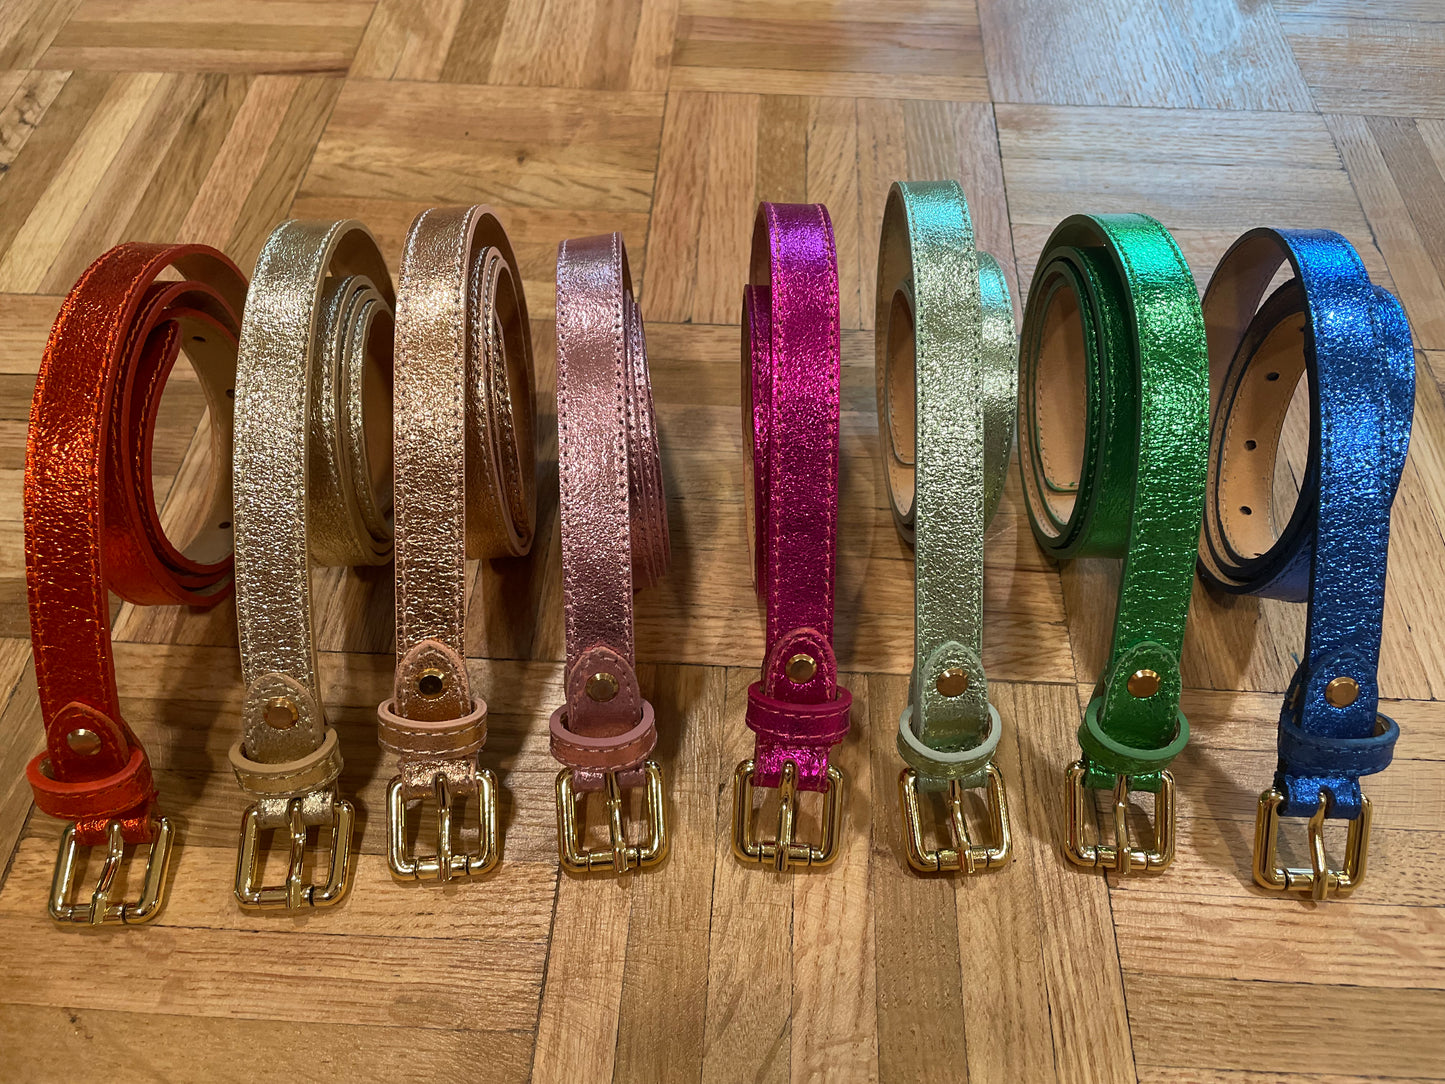 Milena Leather Belt